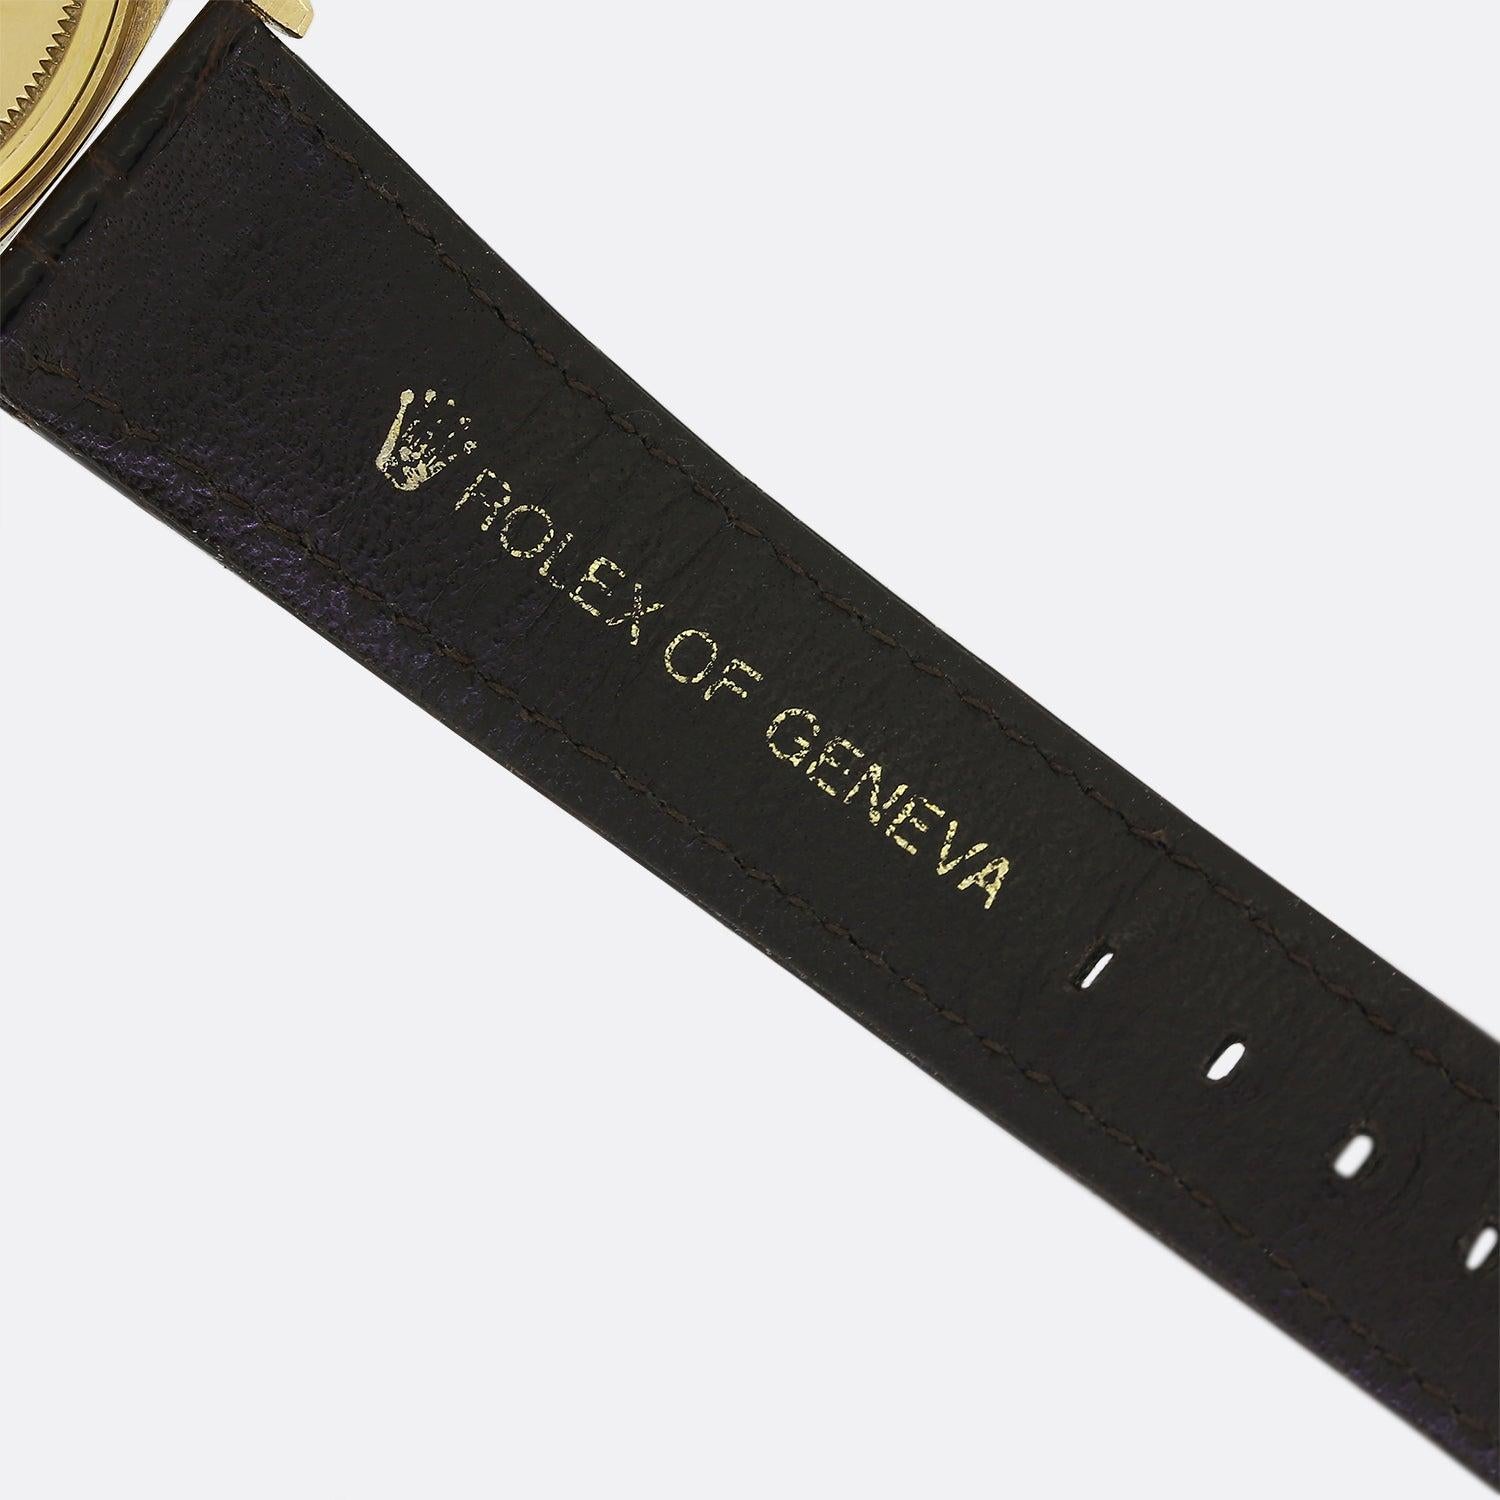 Rolex Vintage Day-Date Automatic Wristwatch 5